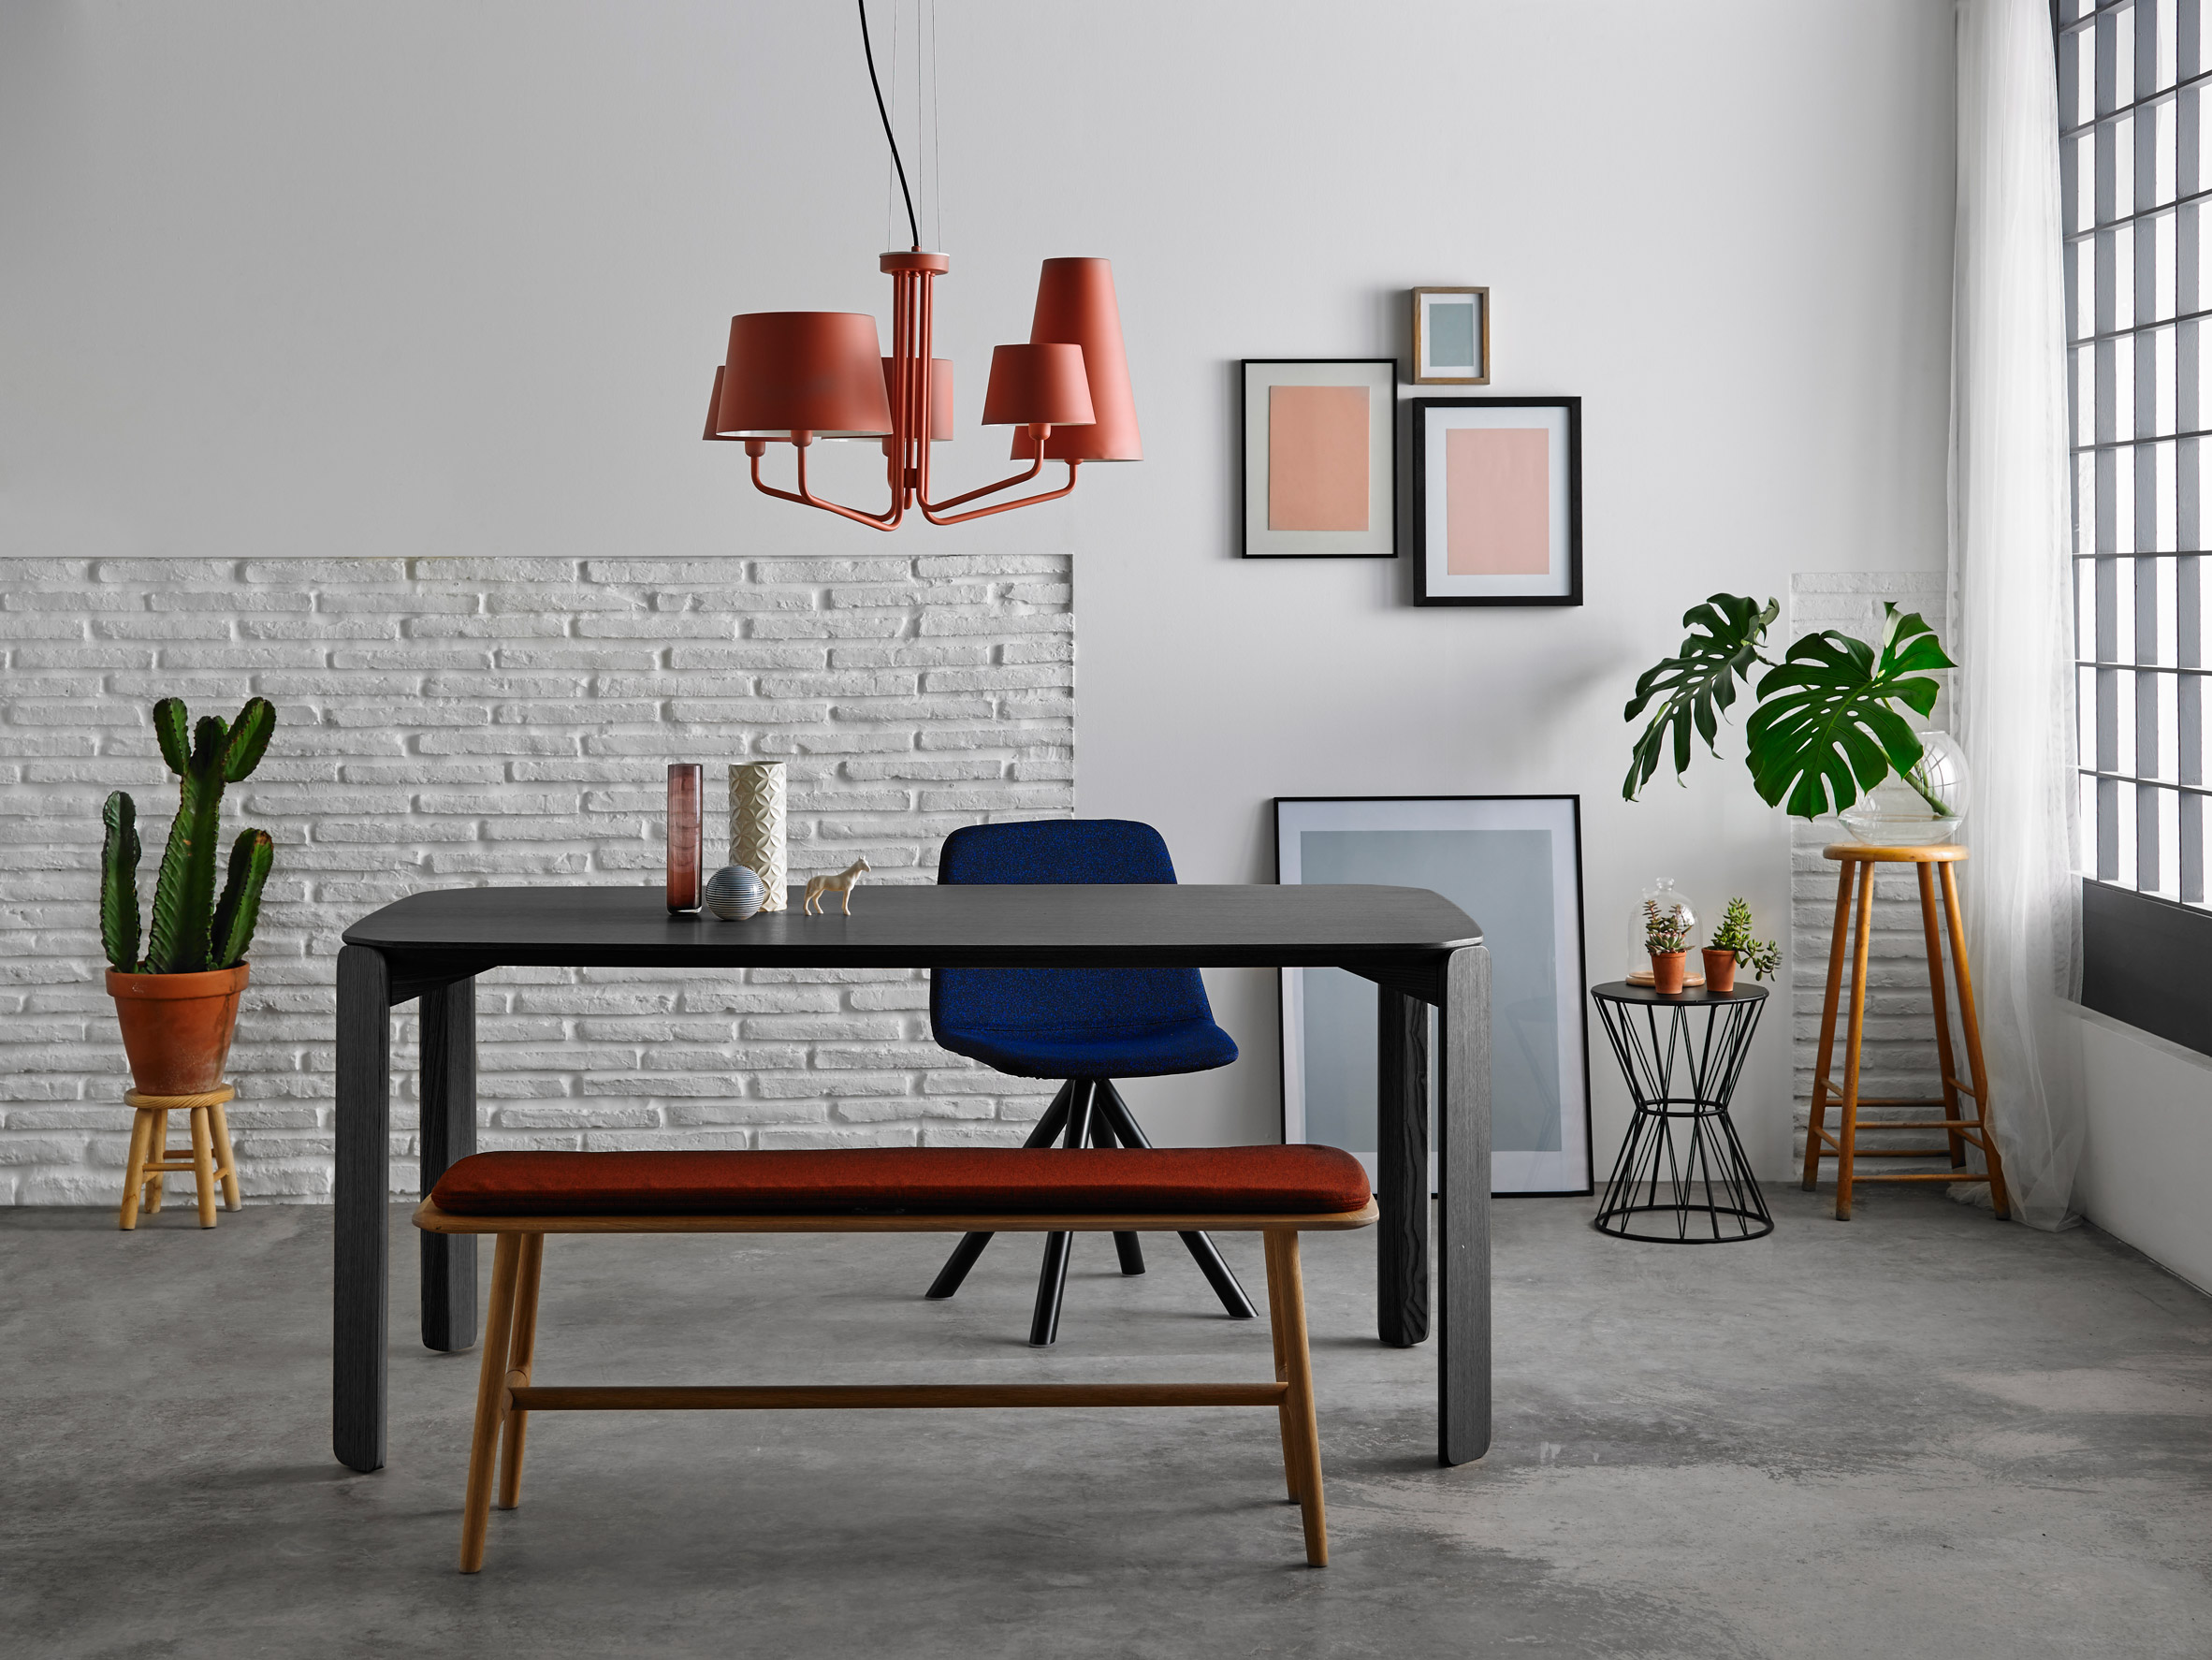 45-table-system-inyard-la-selva-design-furniture_dezeen_2364_col_1